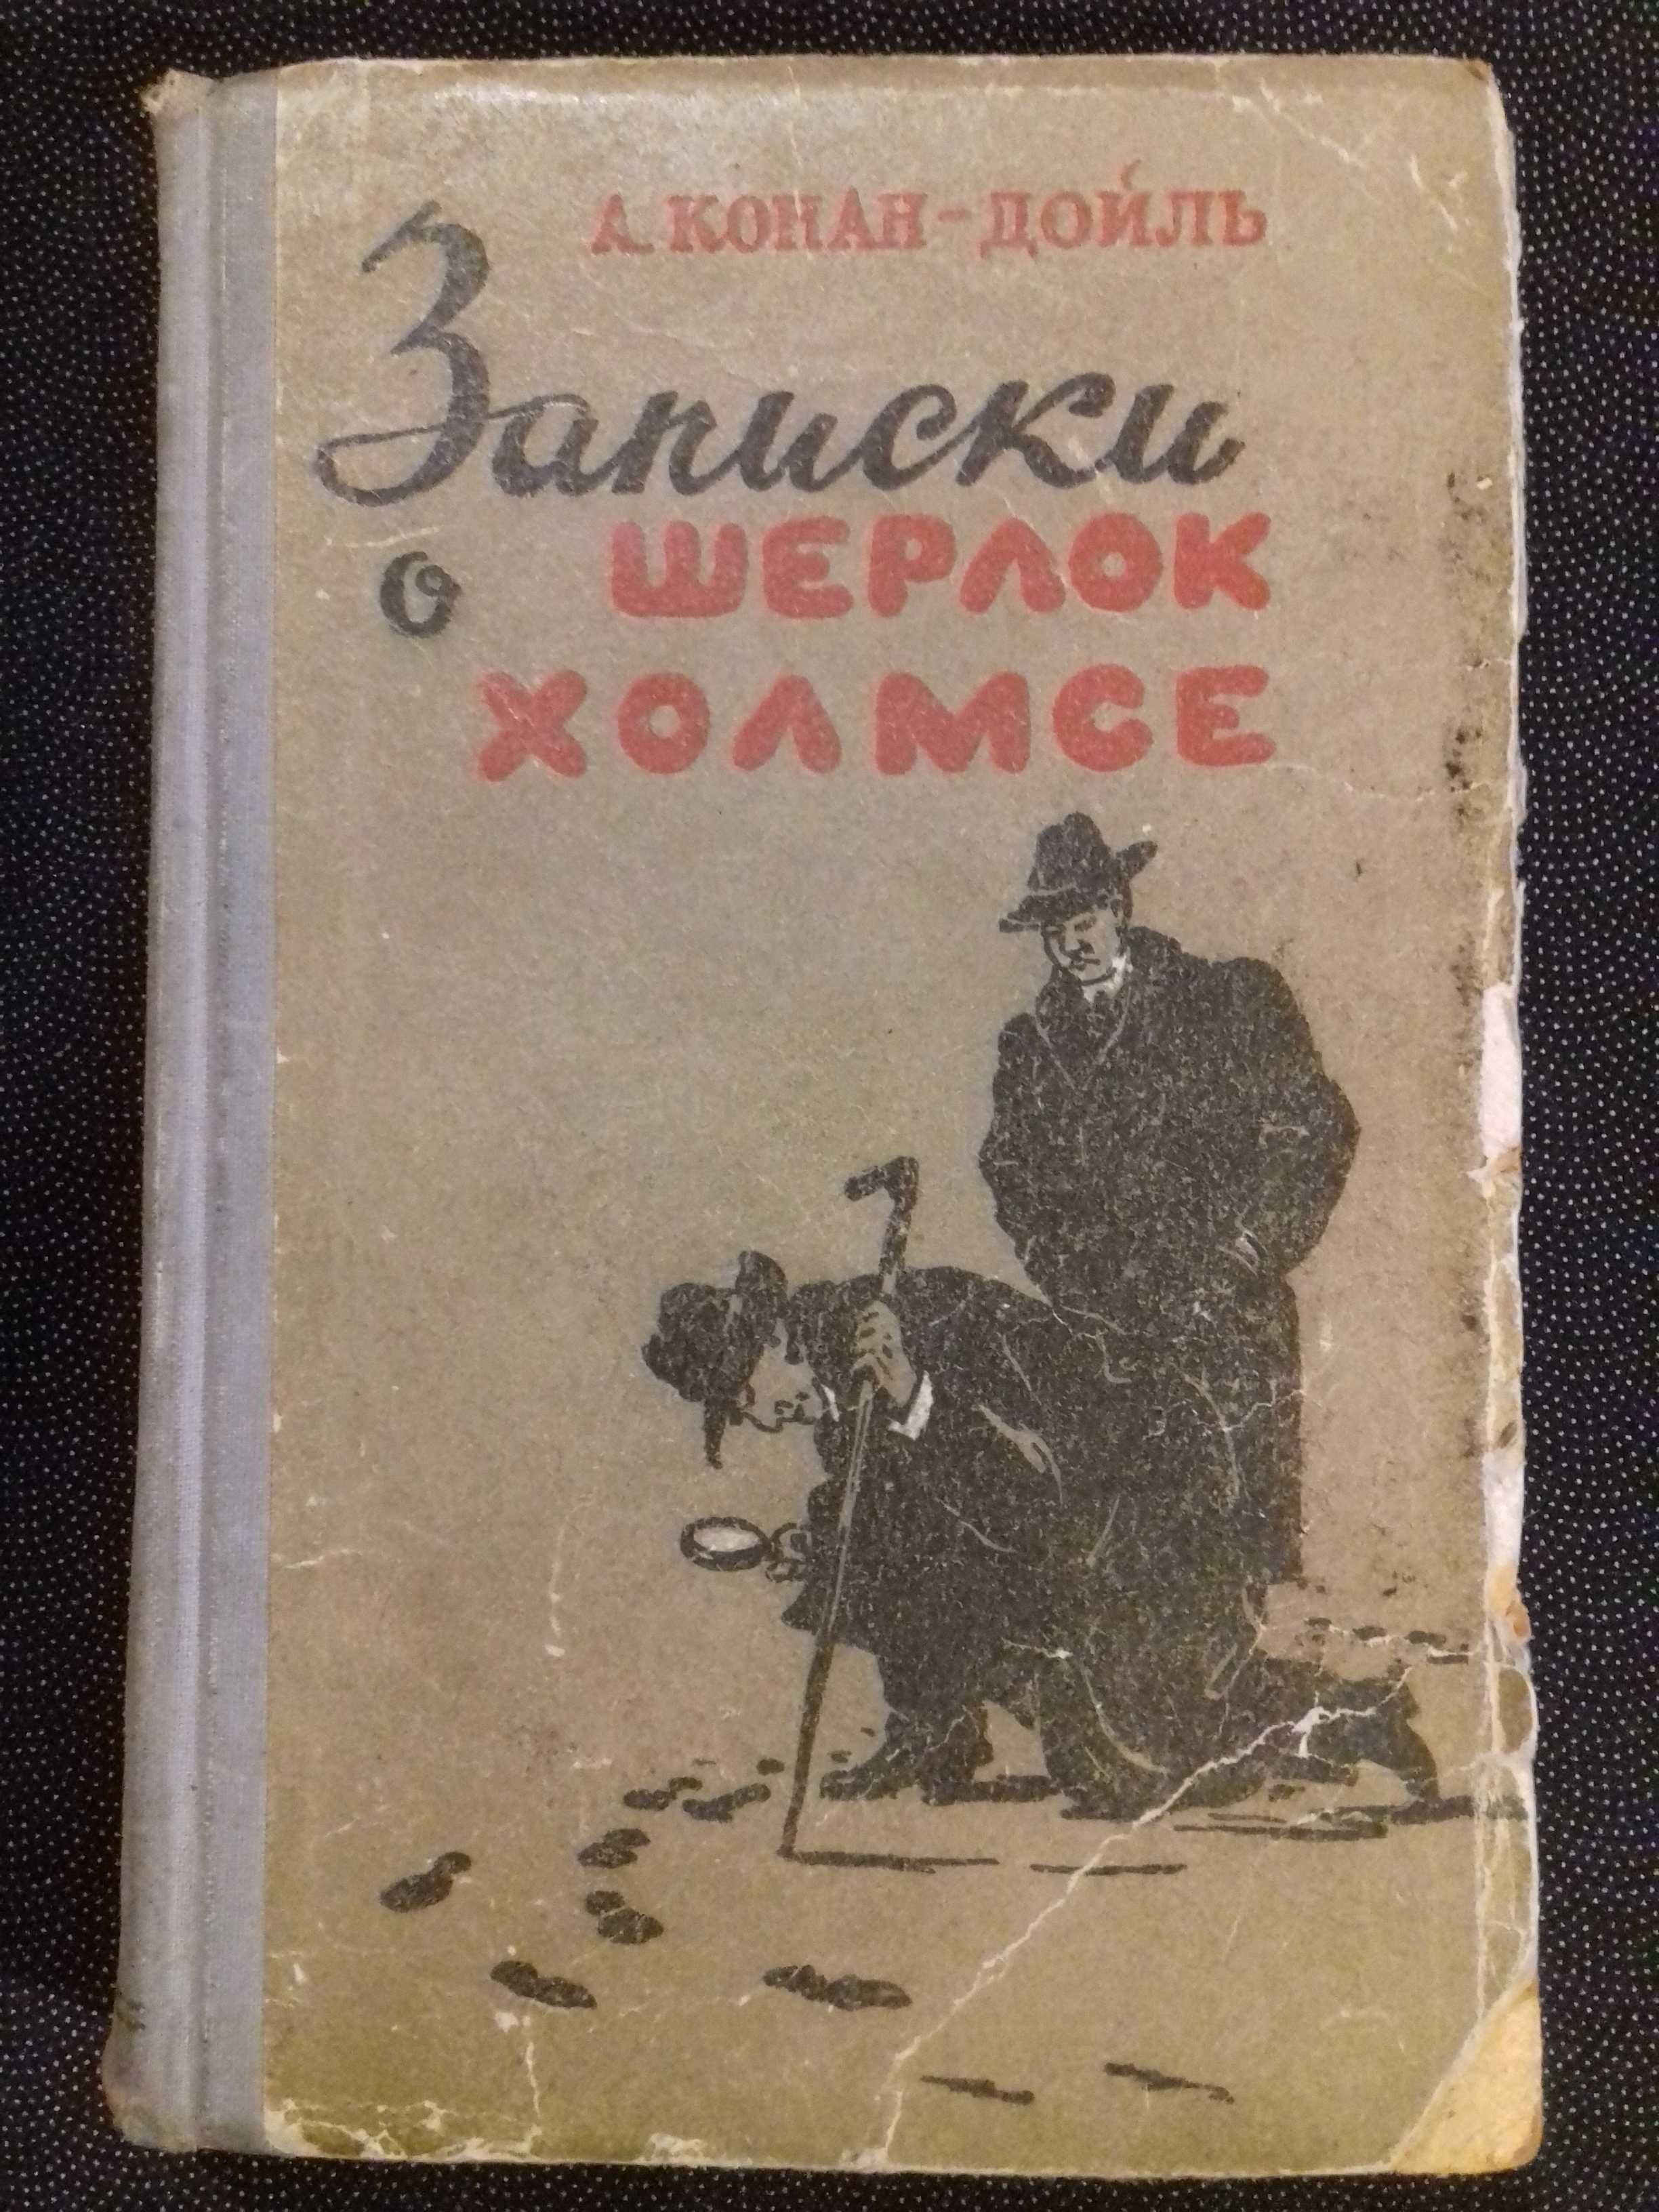 Книга 1957 года.Артур Конан Дойл."Записки о Шерлок Холмсе".